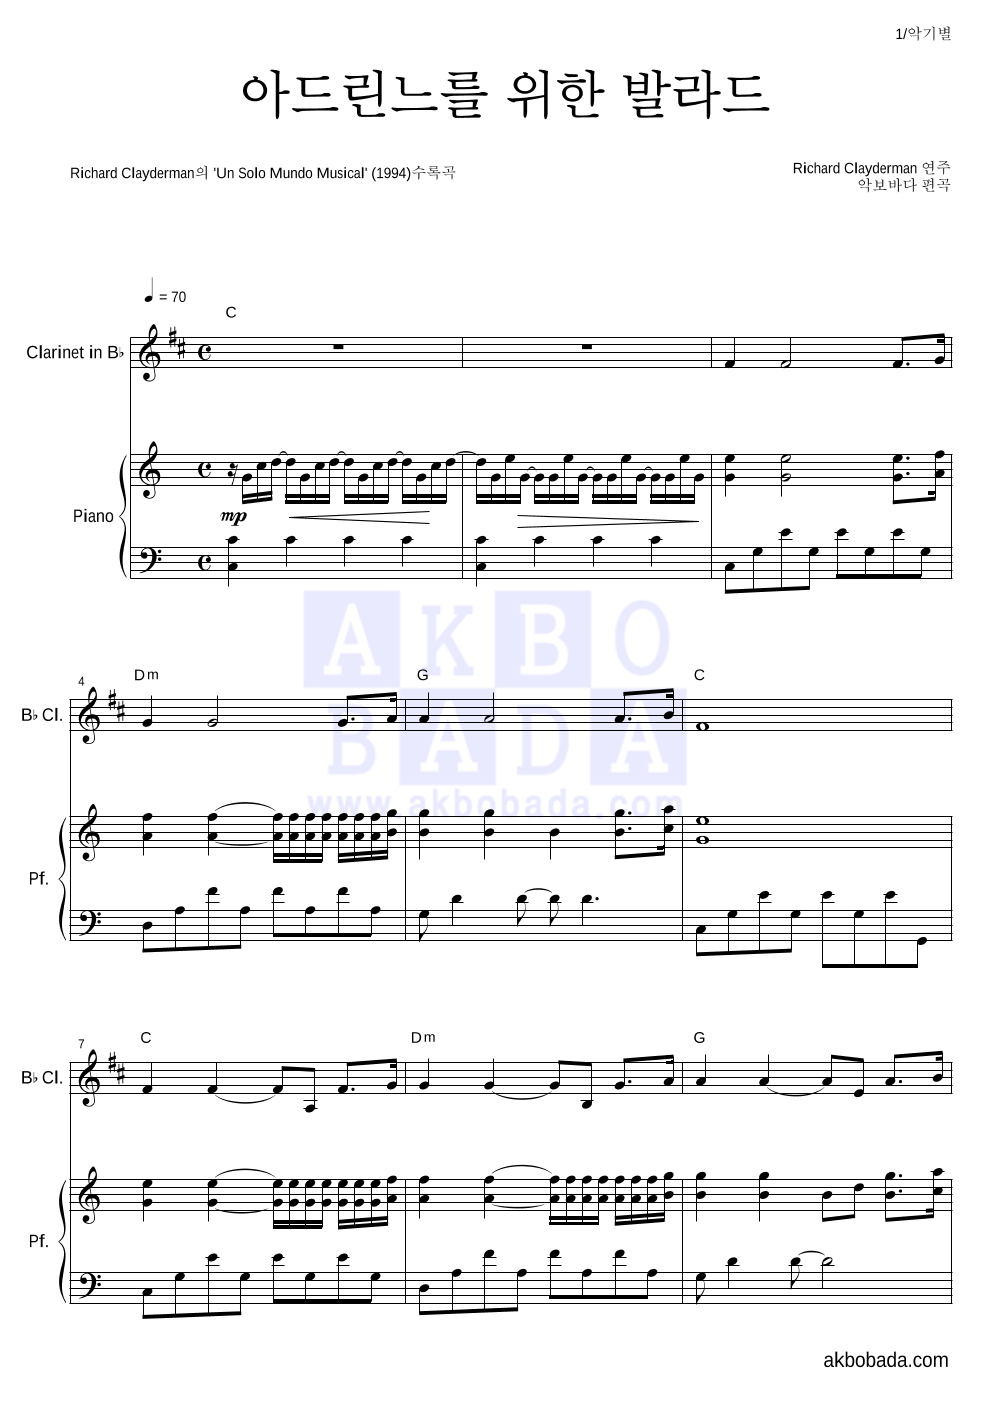 Richard Clayderman  - 아드린느를 위한 발라드 클라리넷&피아노 악보 